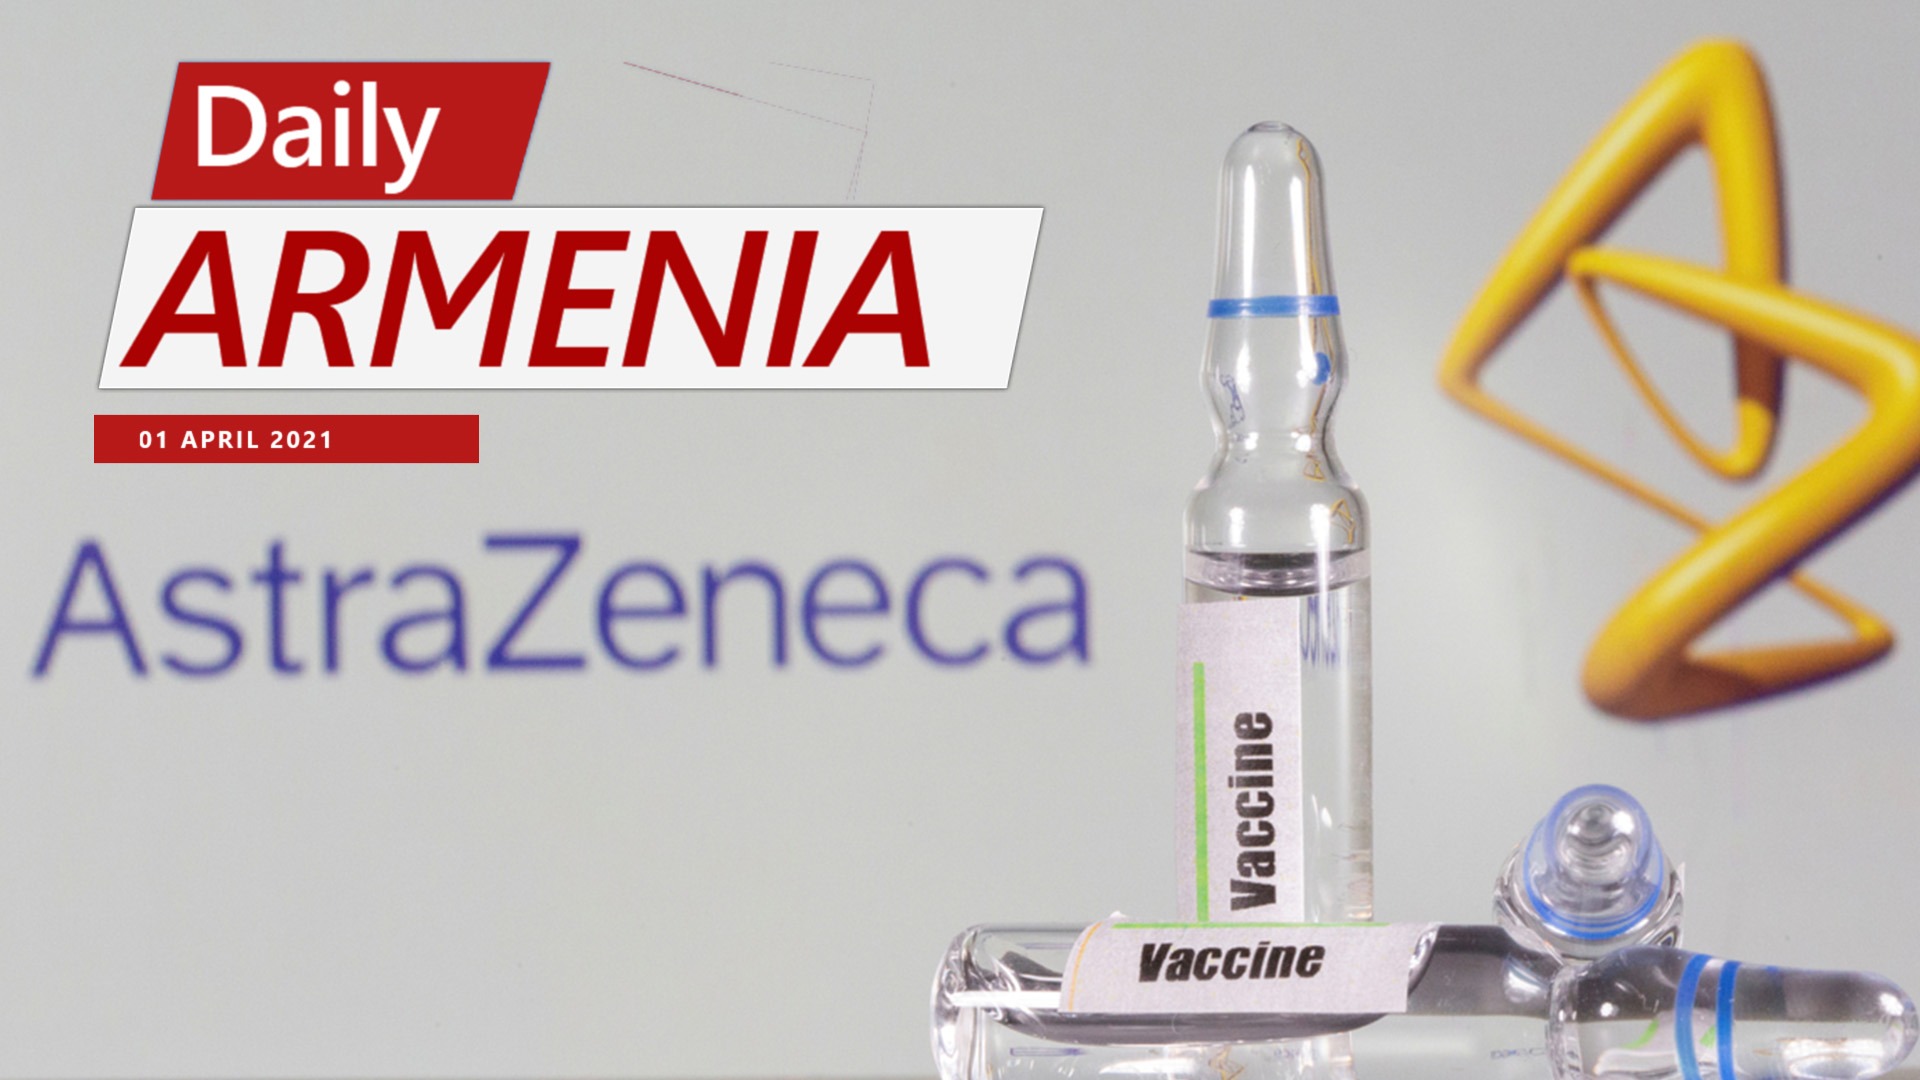 Armenia to Purchase Extra Batches of AstraZeneca Vaccine